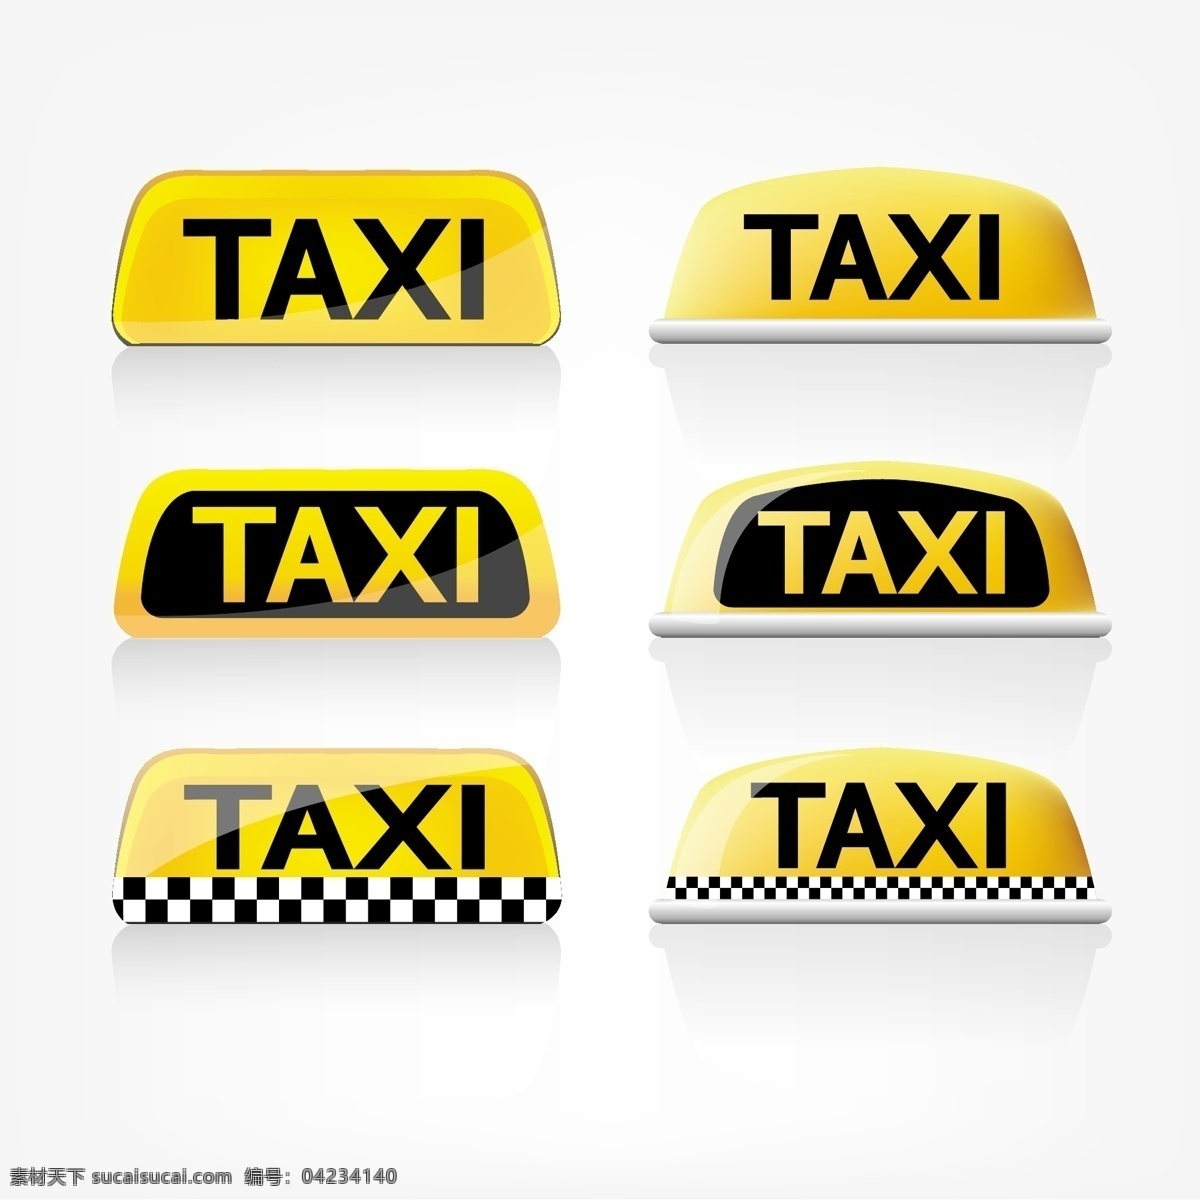 logo 标 标签 标识标志图标 标志 出租车 黑色 黄色 路标 taxi 标矢量素材 标模板下载 打的 小图标 矢量 图标 psd源文件